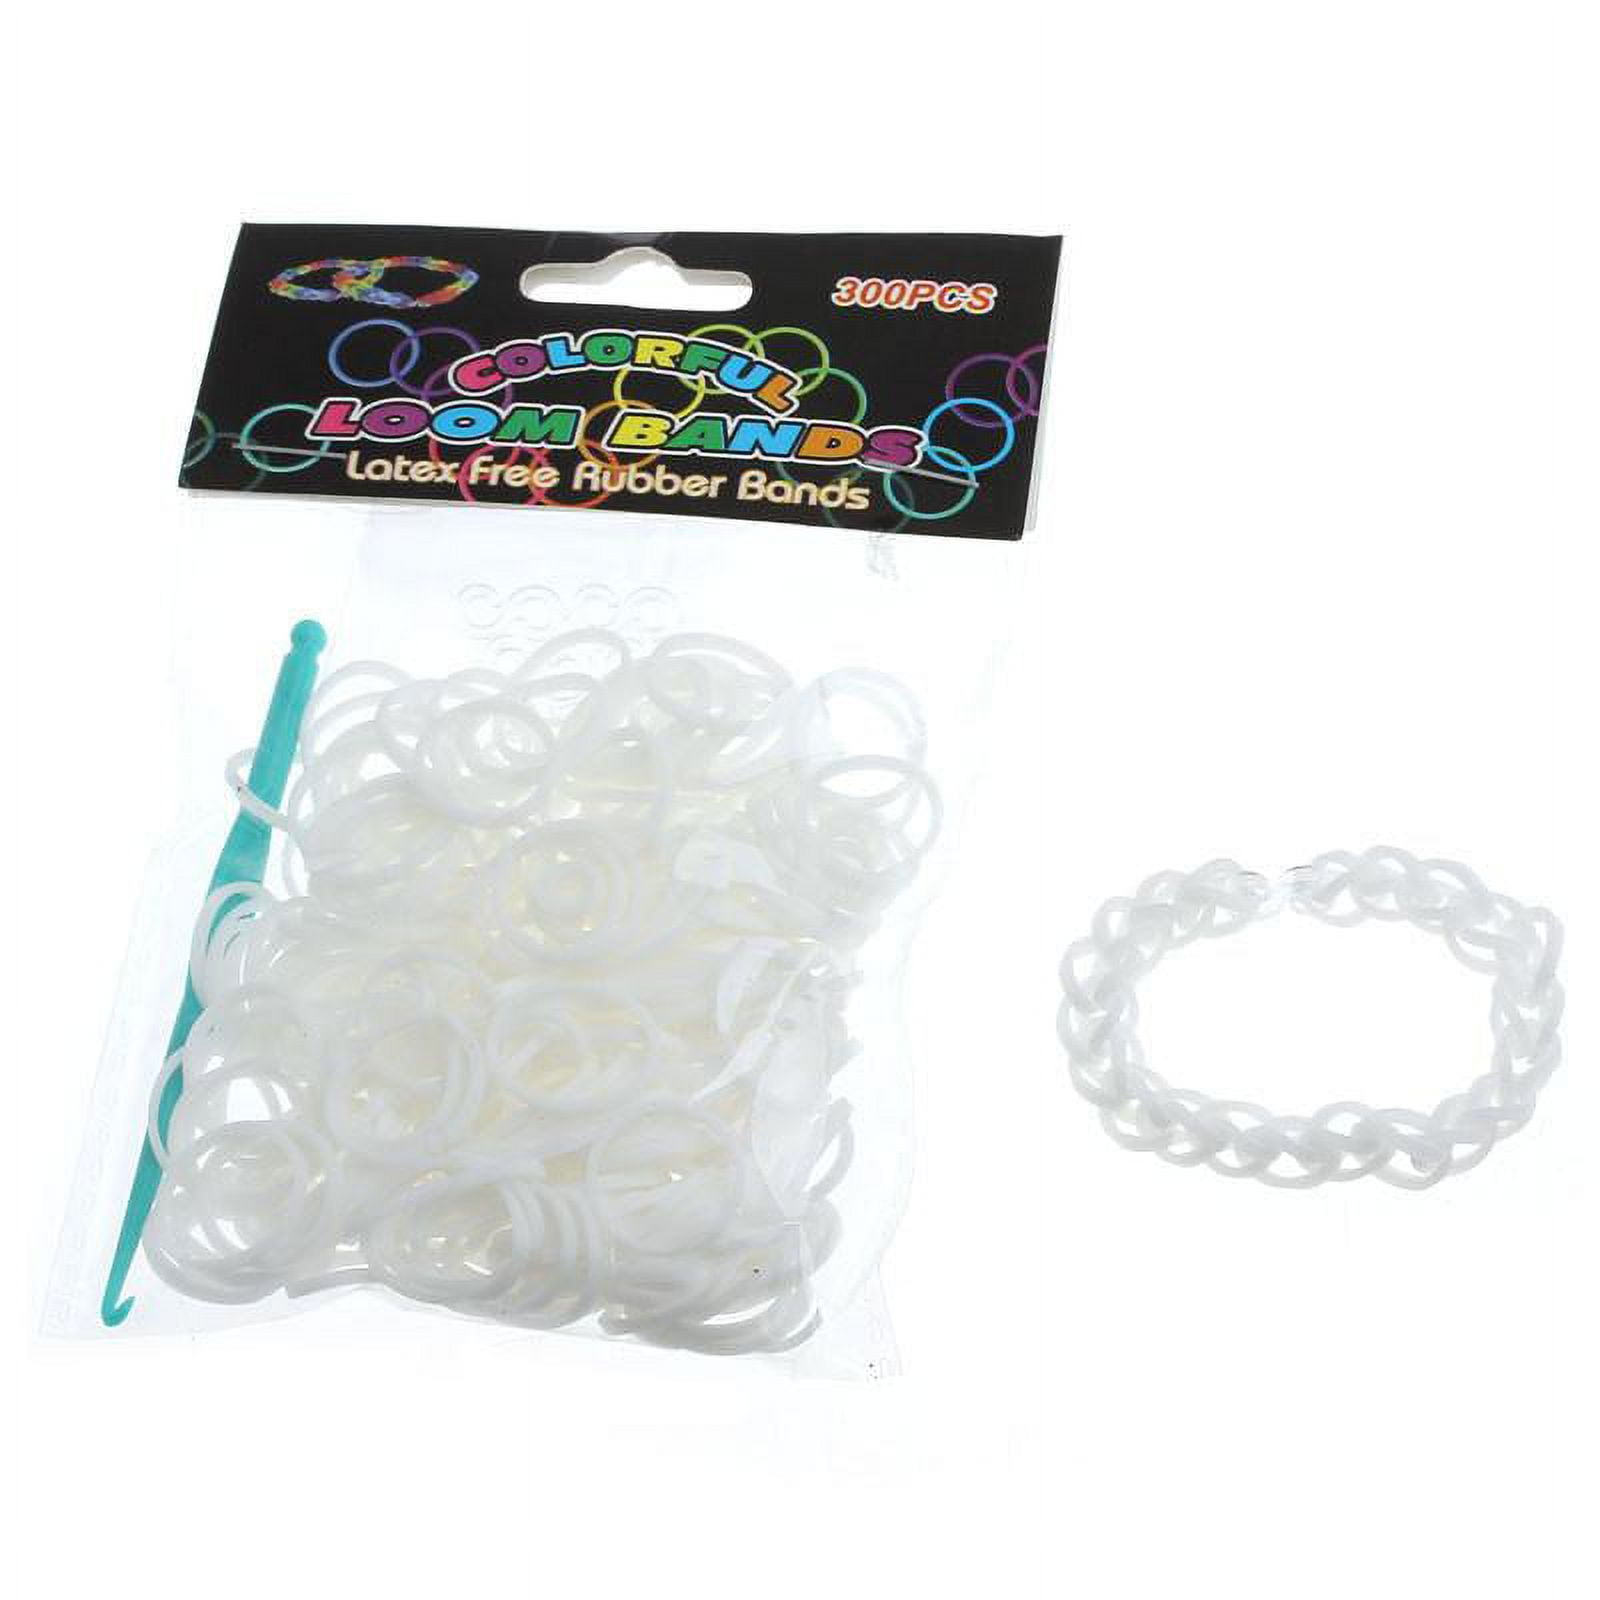  Teaaha 500PCS S Clips for Rubber Band Bracelets